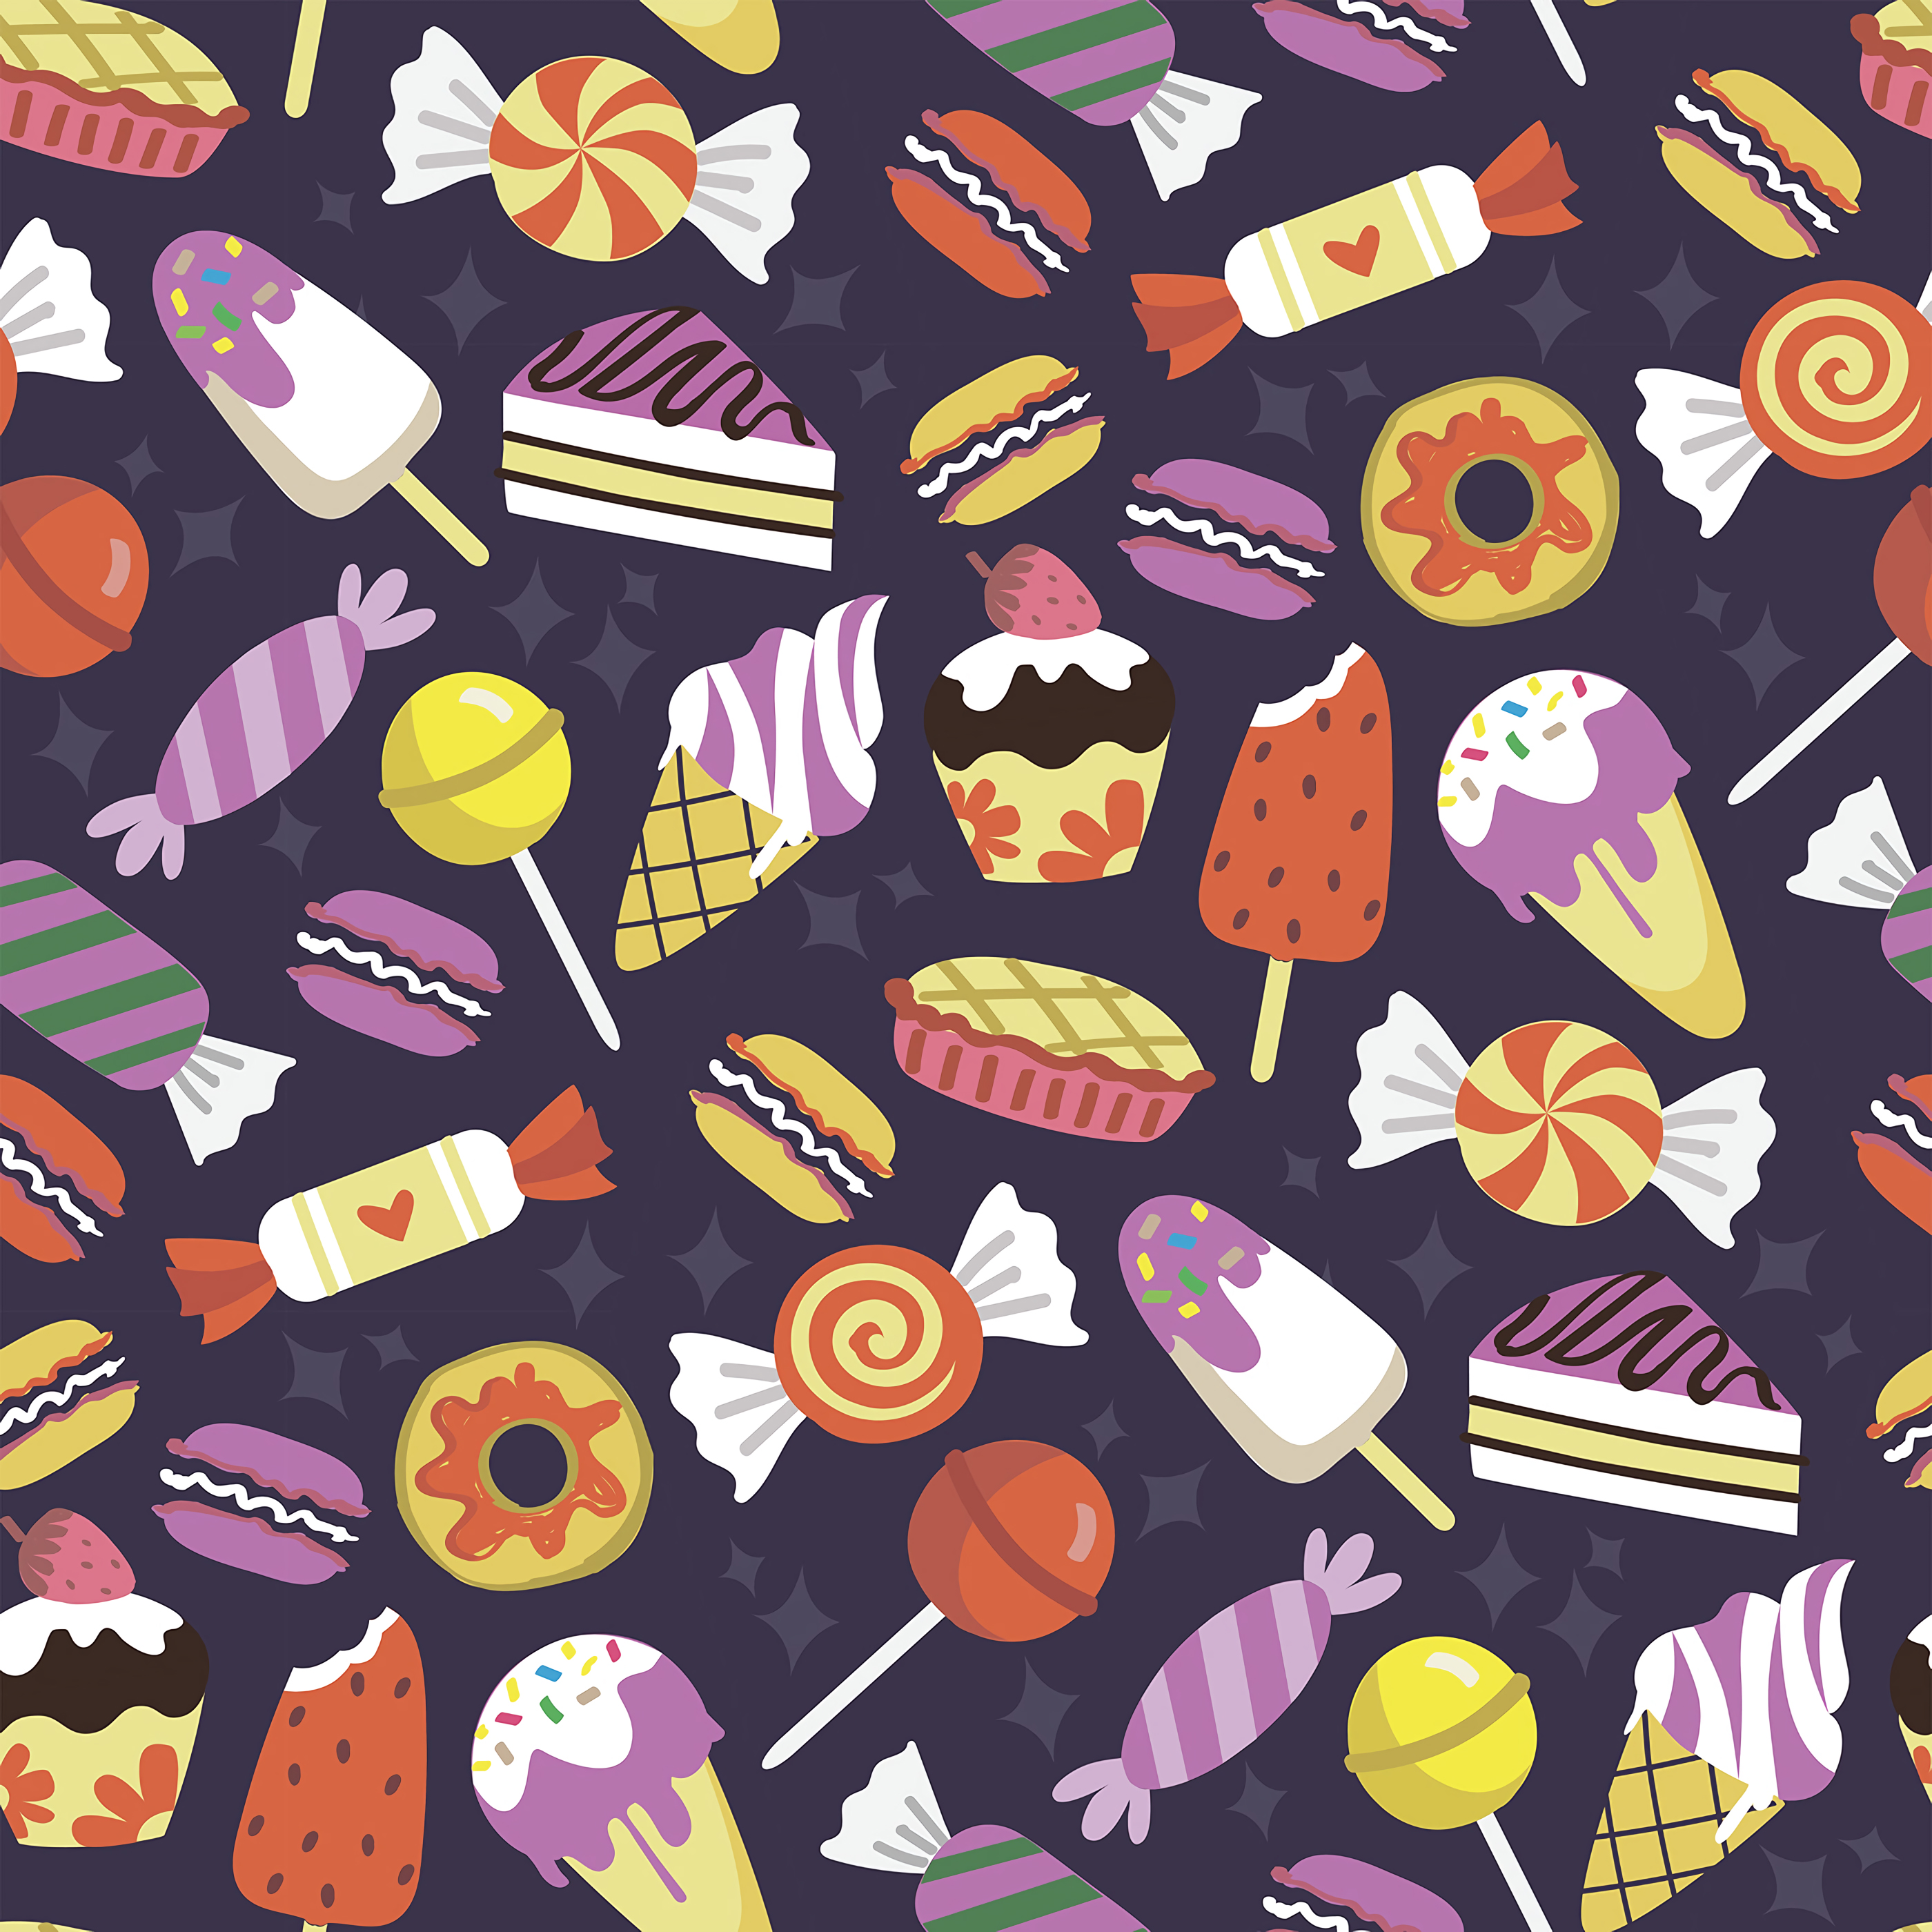 candies, ice cream, cookies, pattern, texture, textures, cupcakes